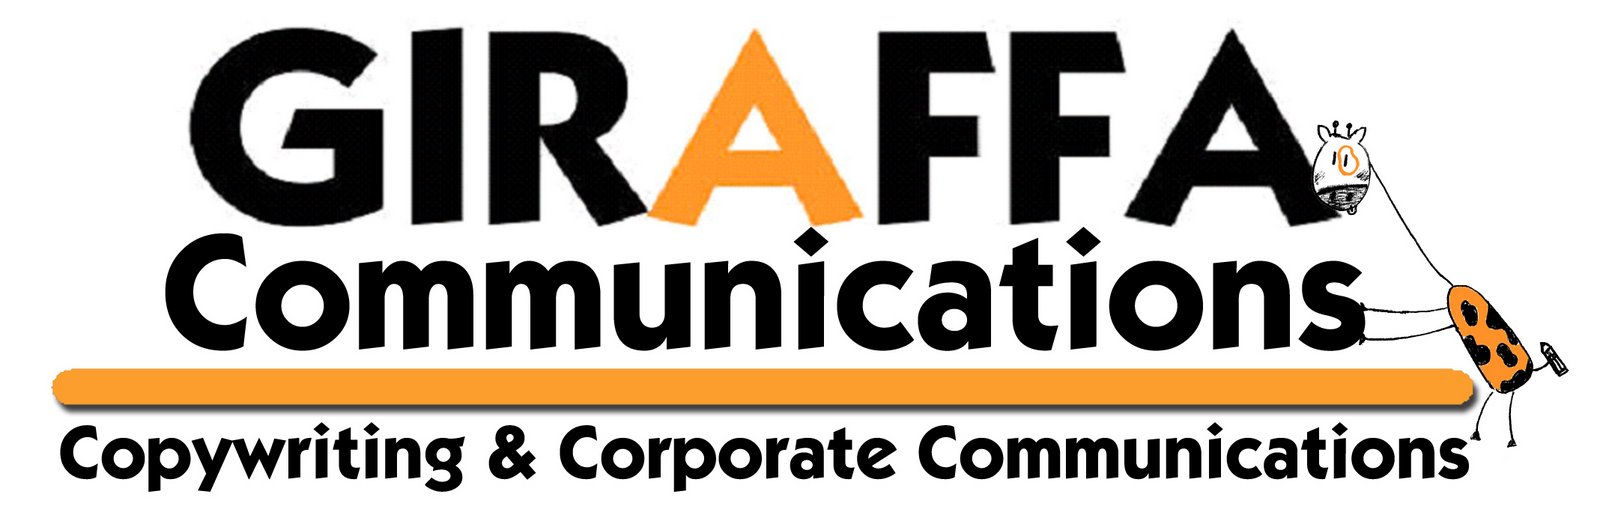 Giraffa Communications - cn